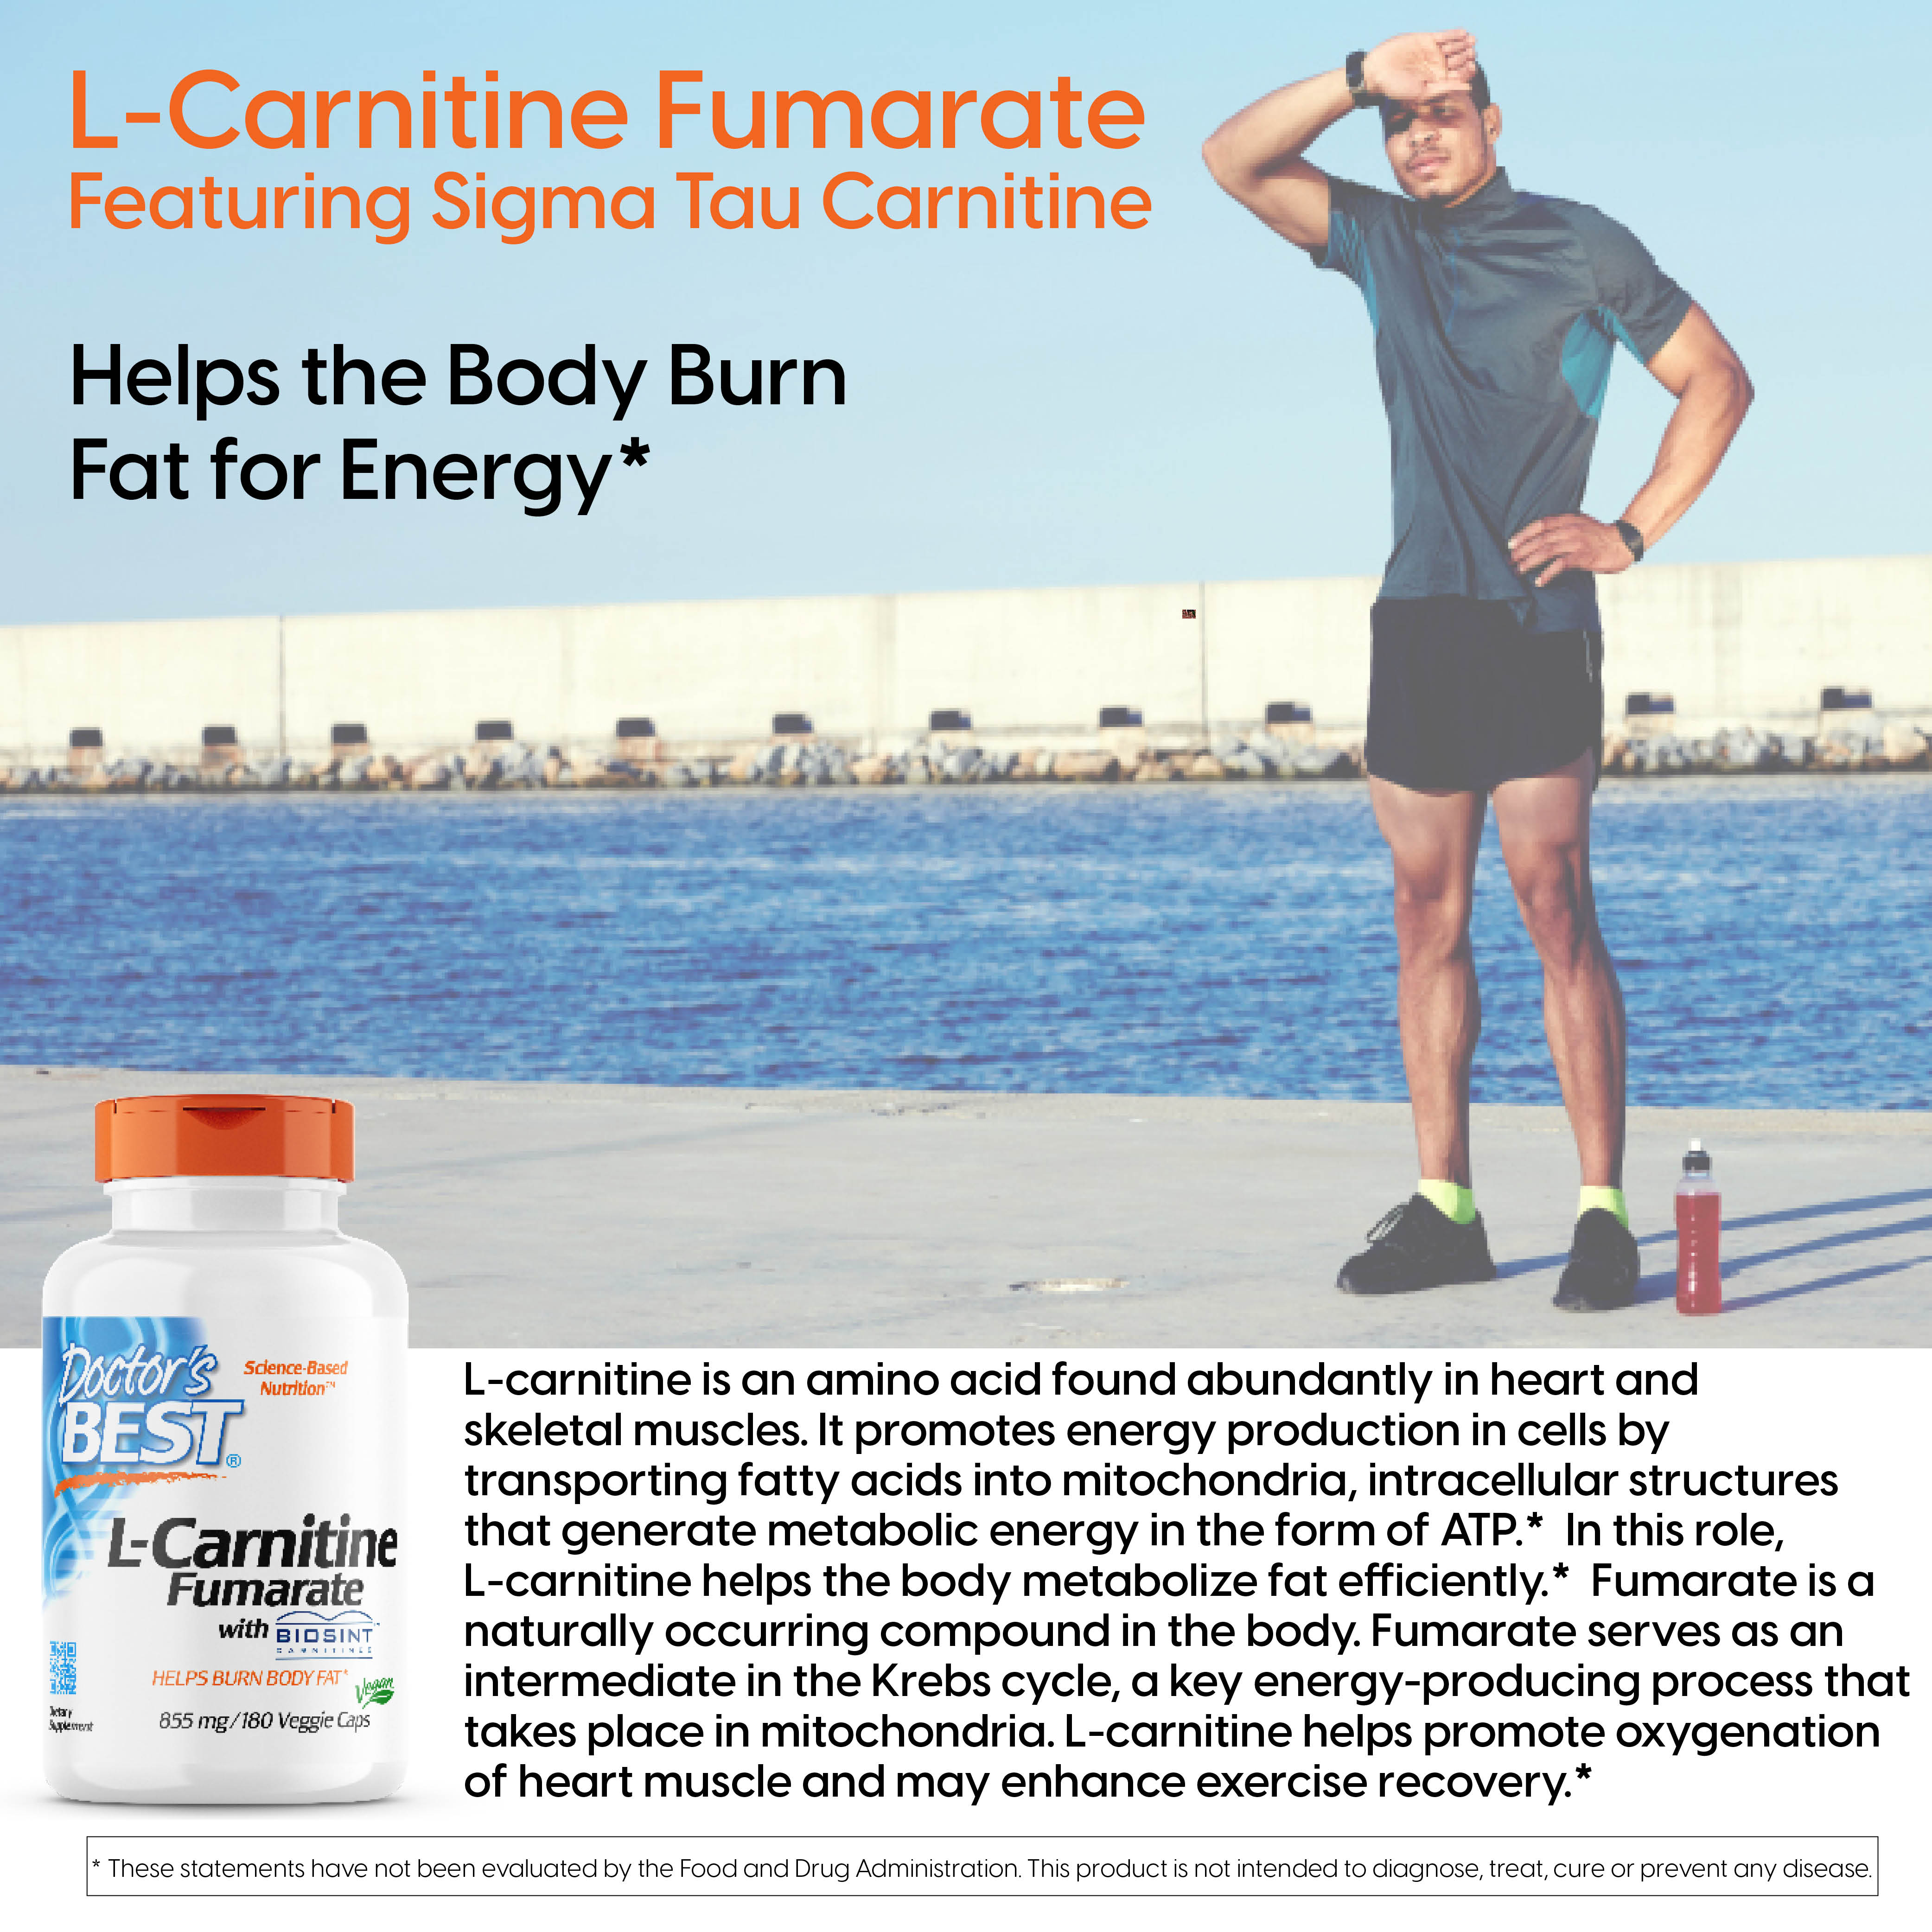 Doctor's Best - L-Carnitine Fumarate 855 mg. - 180 Vegetarian Capsules - image 6 of 19